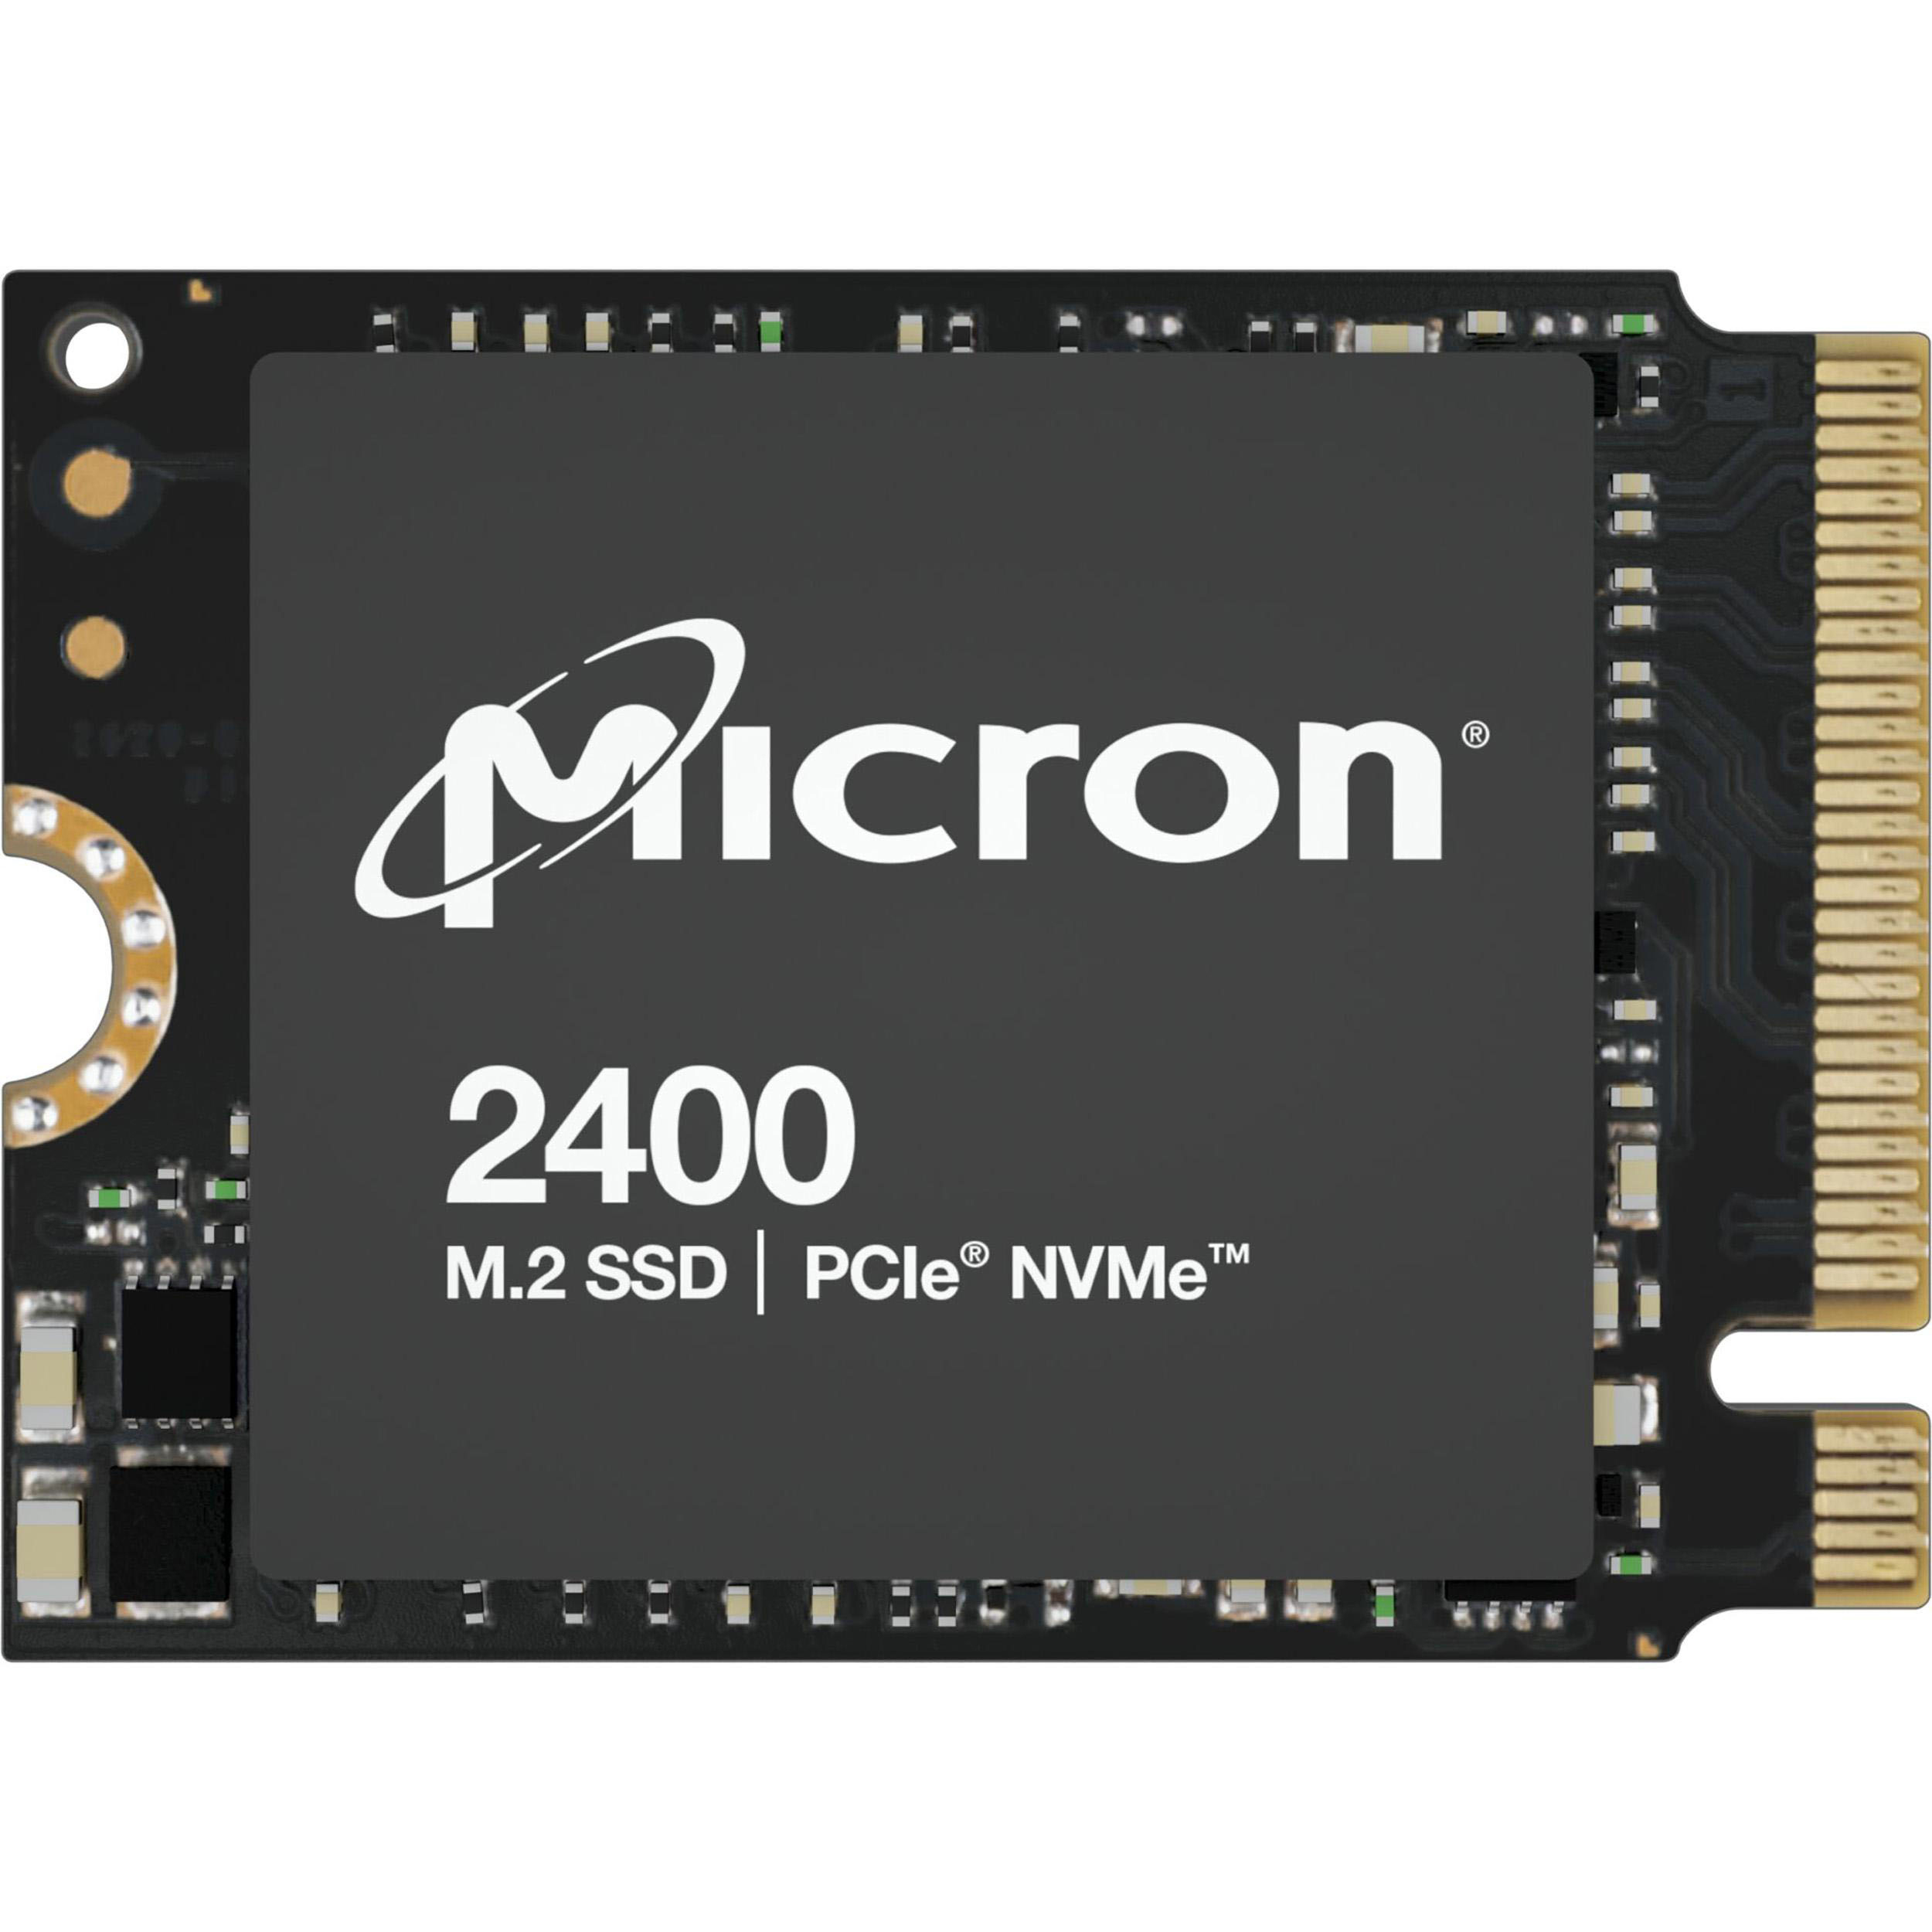 NVMe Micron CRUCIAL Non-SED SSD GB intern 1000 M.2 Express, Festplatte, 2400 PCI